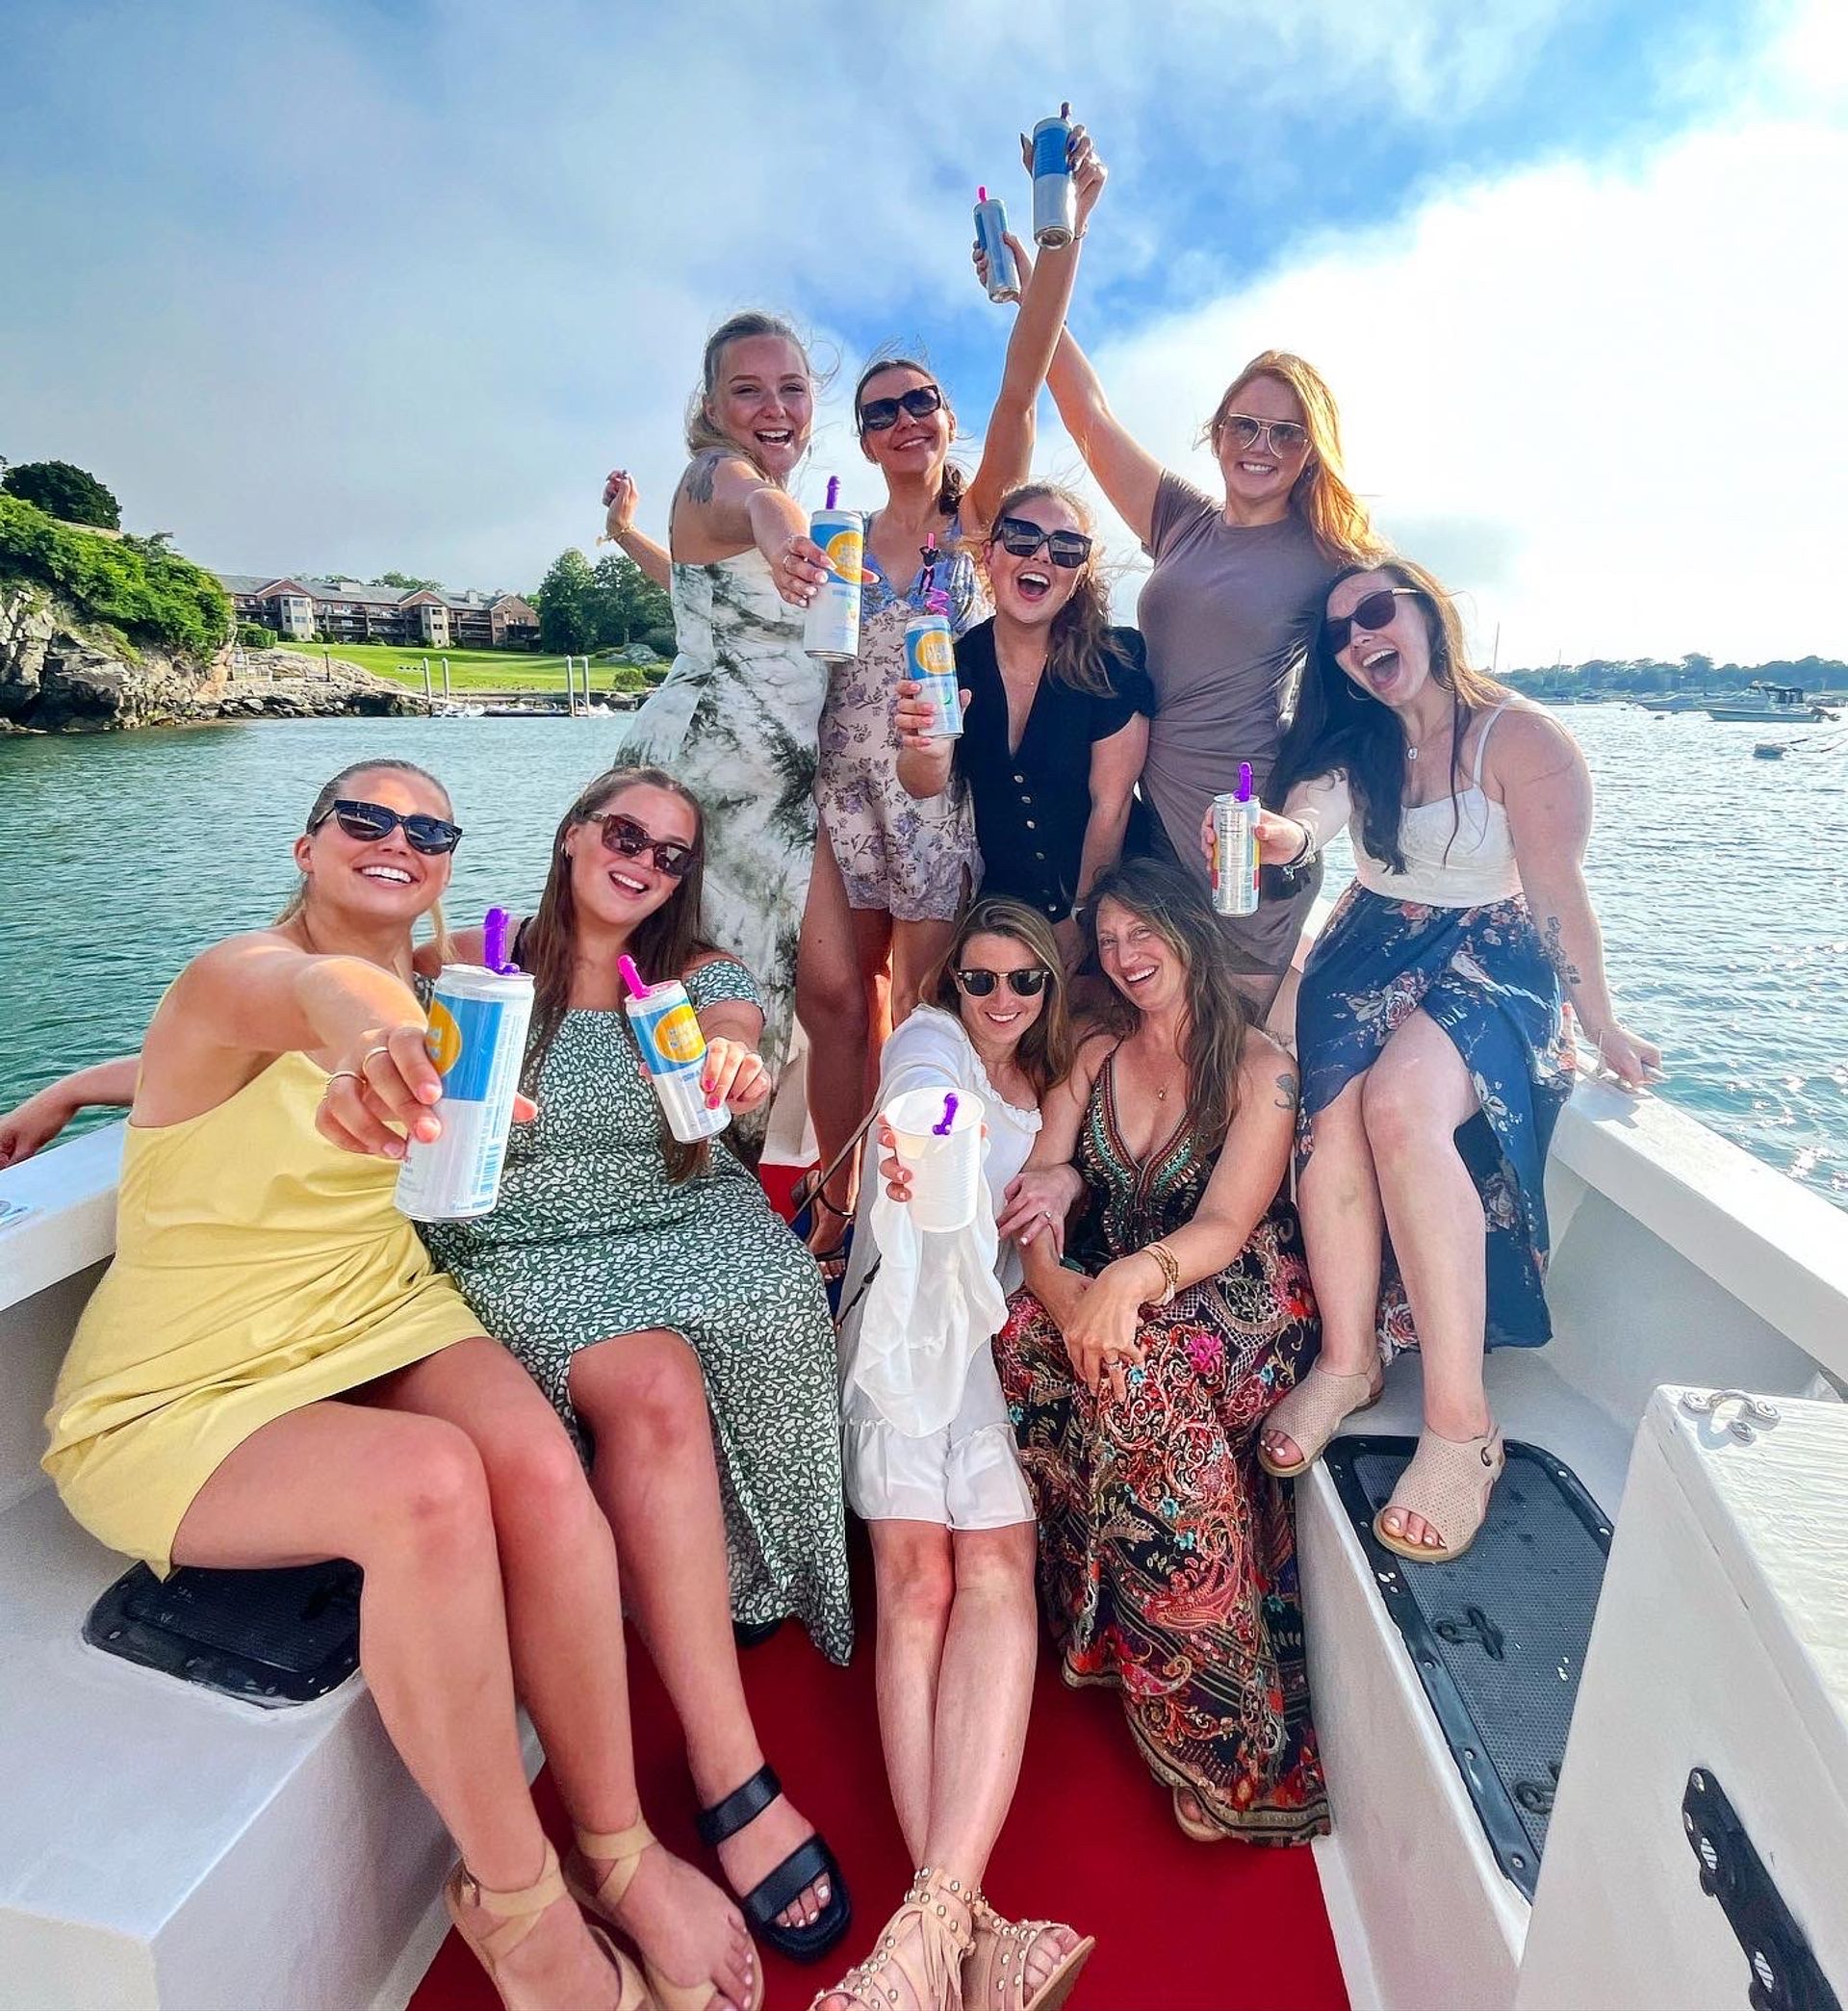 Private Party Charter: Swim, Dance, Celebrate, & Cruise Around the Beautiful Newport Harbor (BYOB) image 1